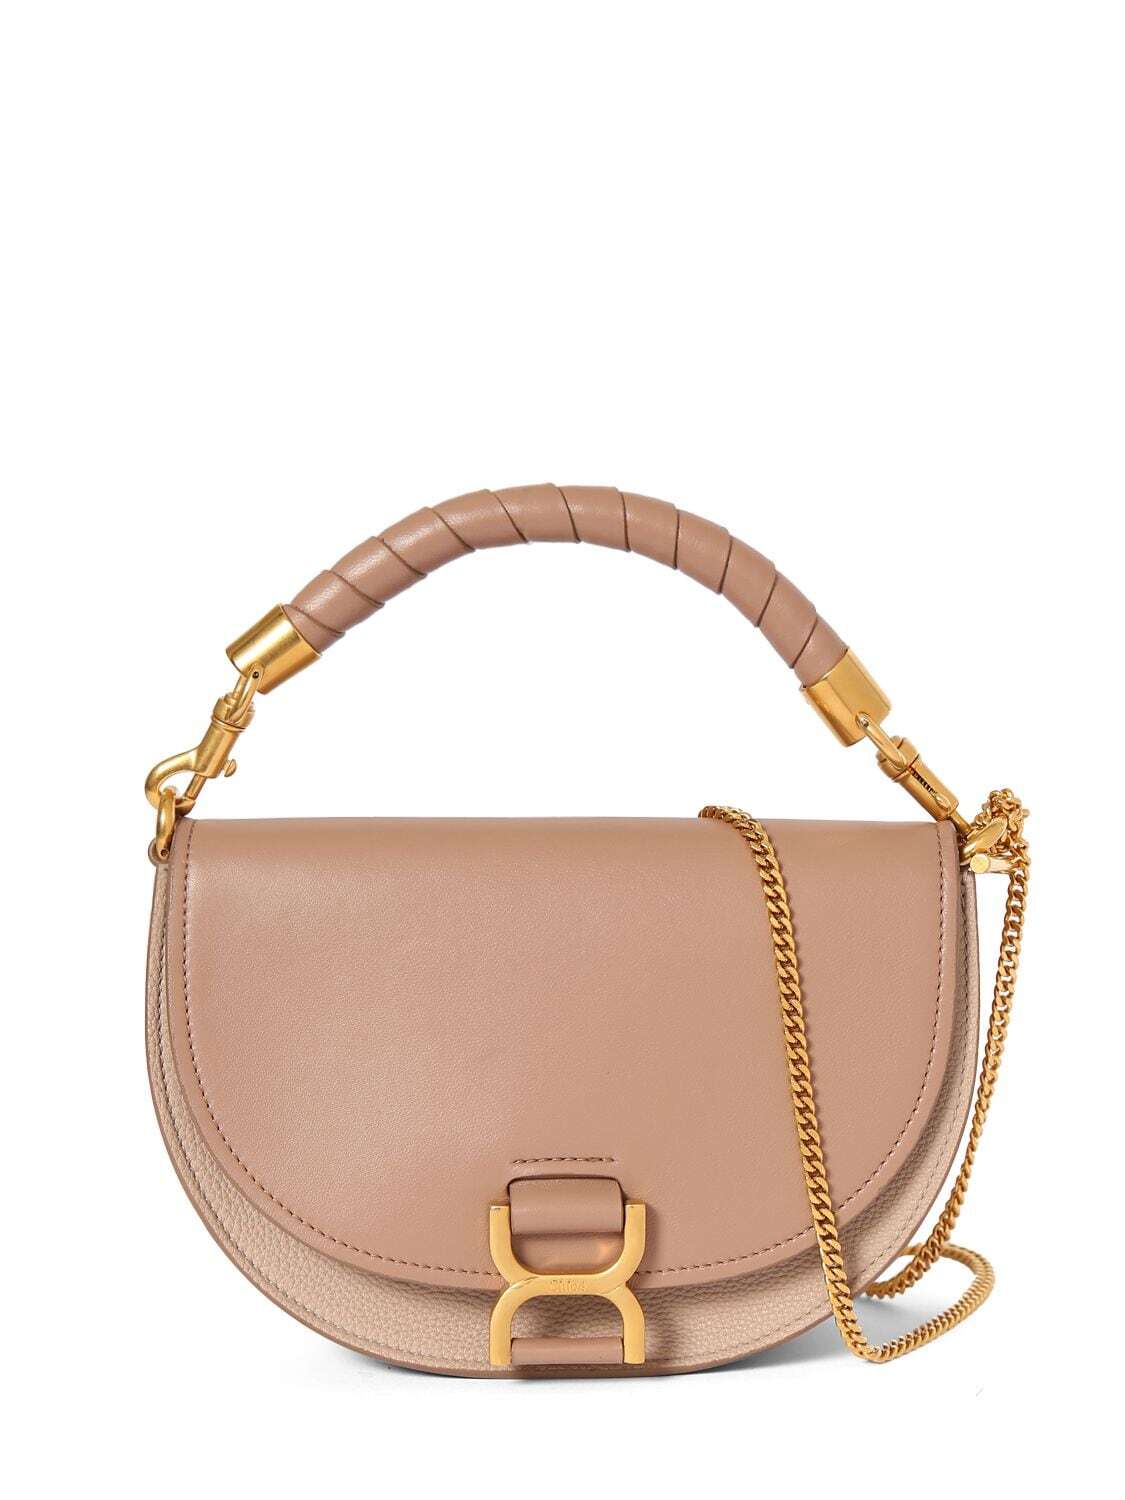 CHLOÉ Marcie Leather Top Handle Bag